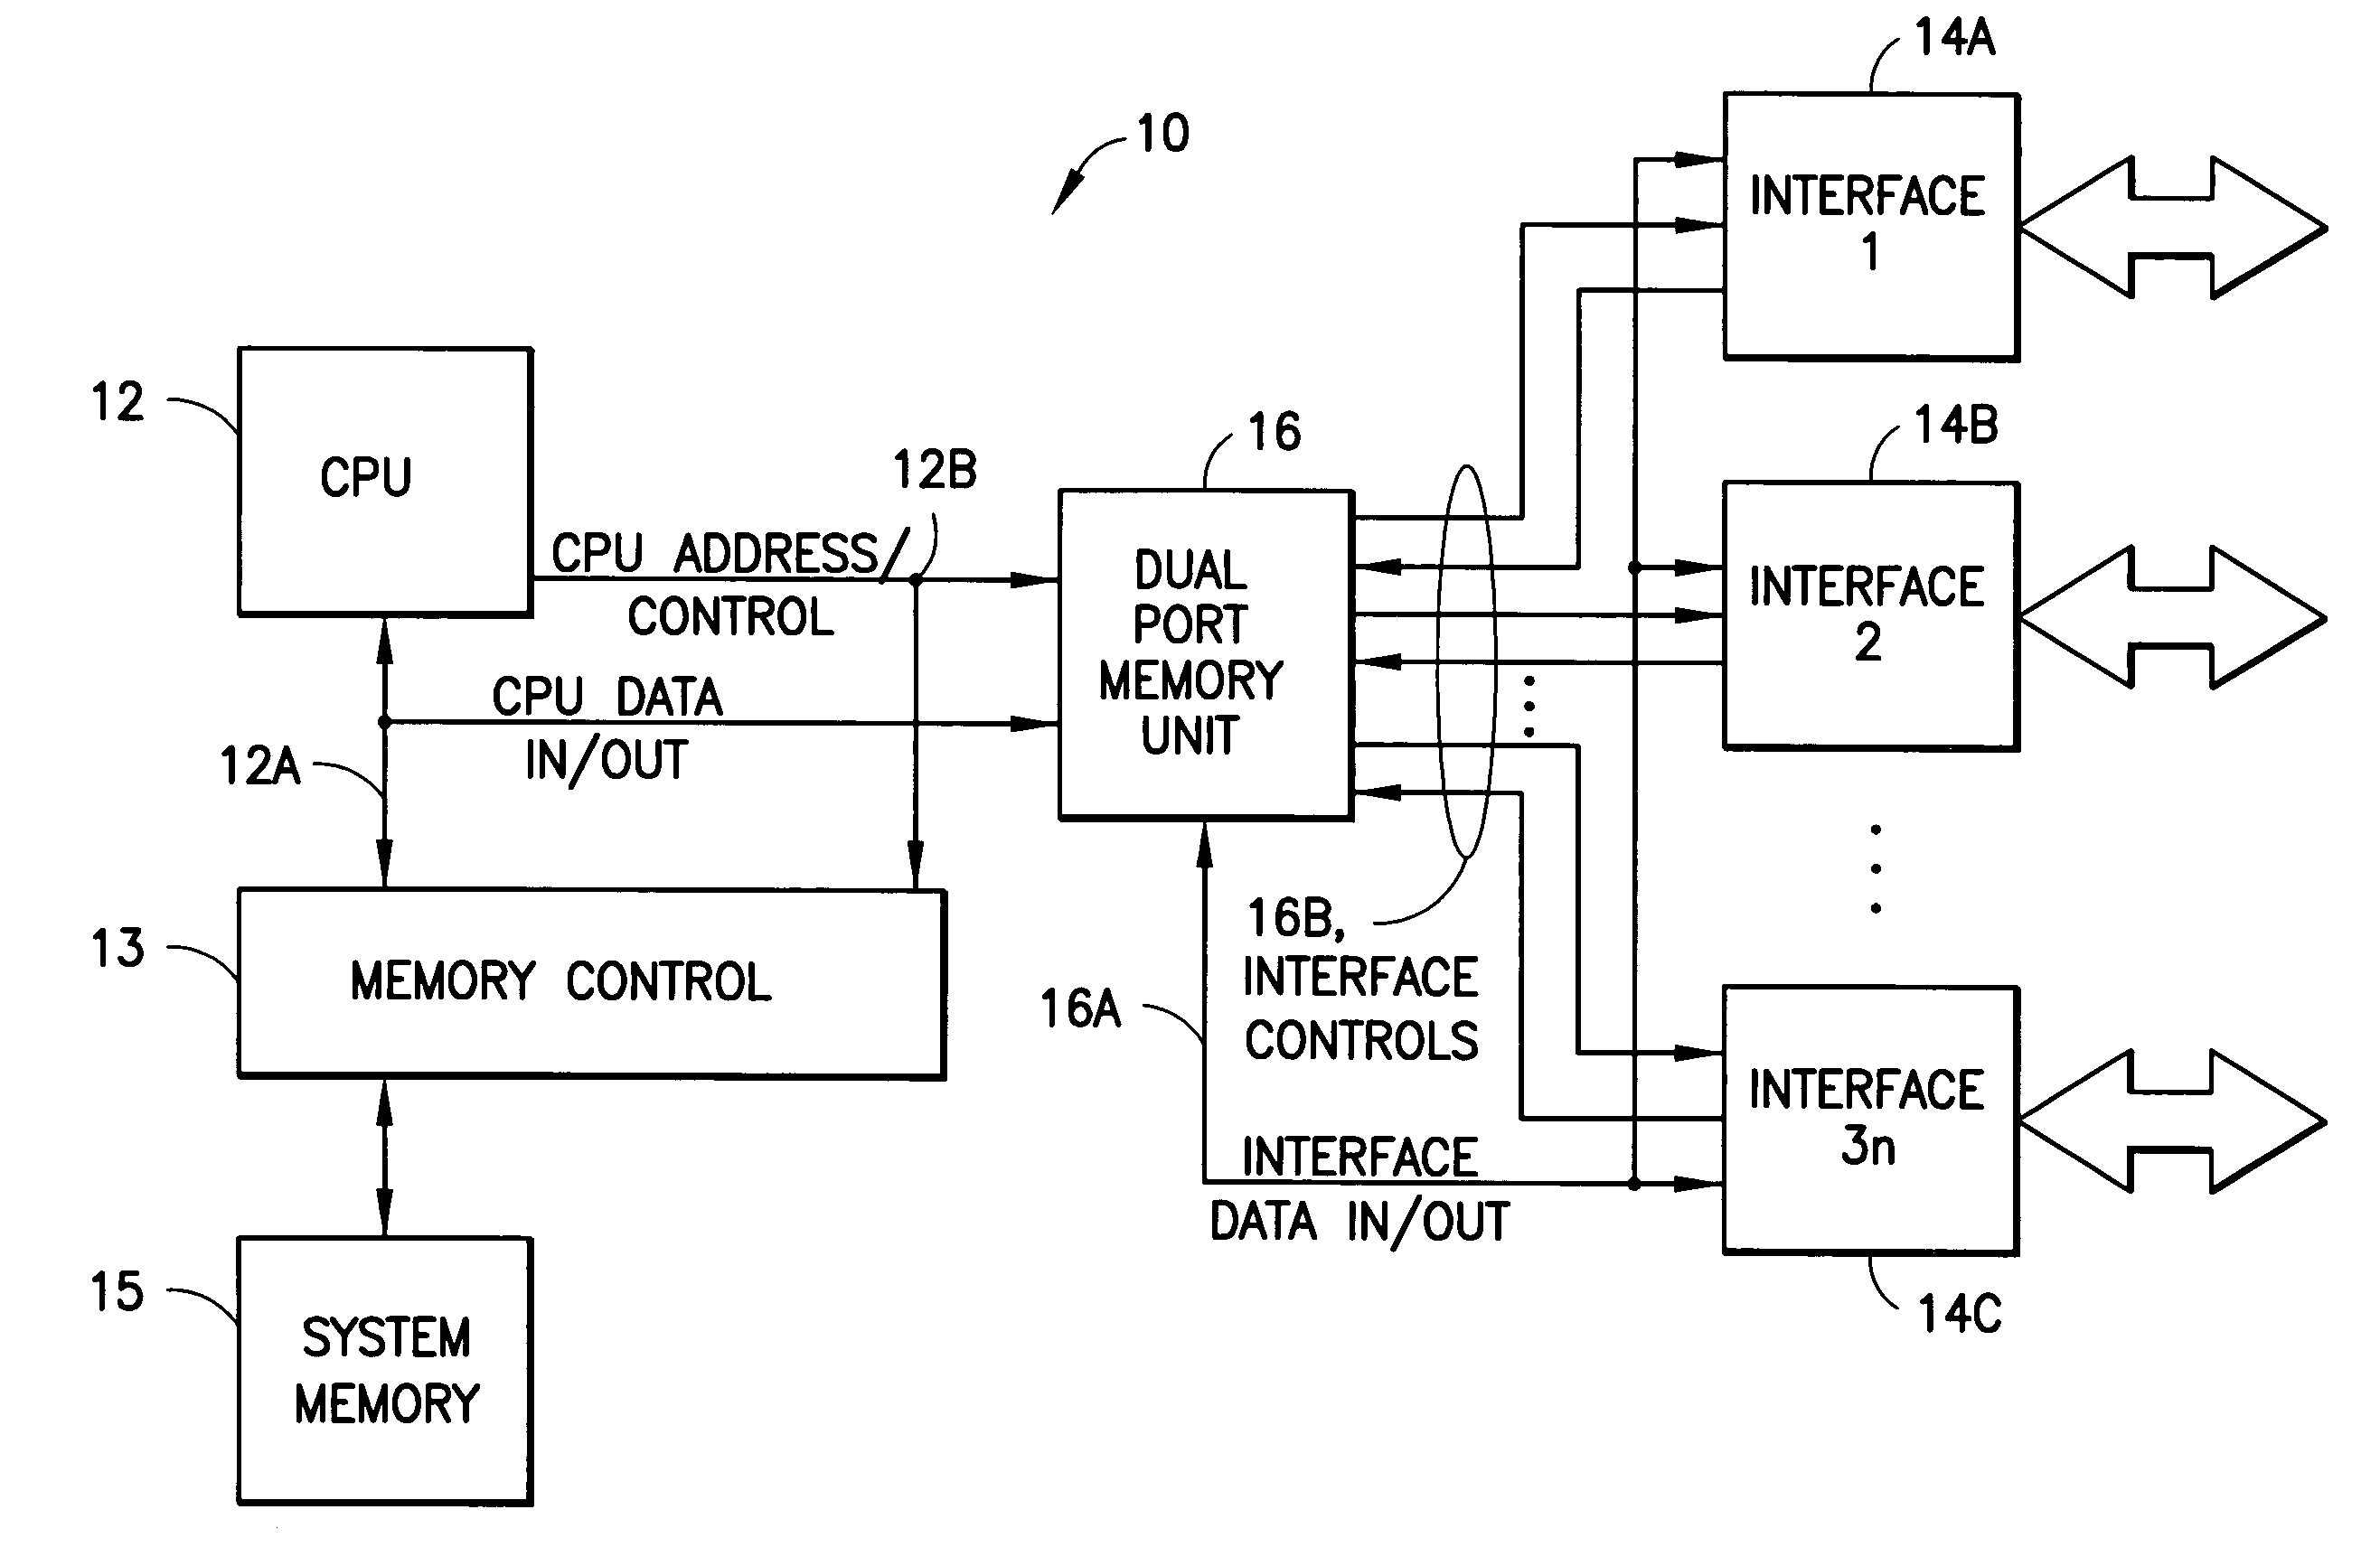 Programmable CPU/interface buffer structure using dual port RAM